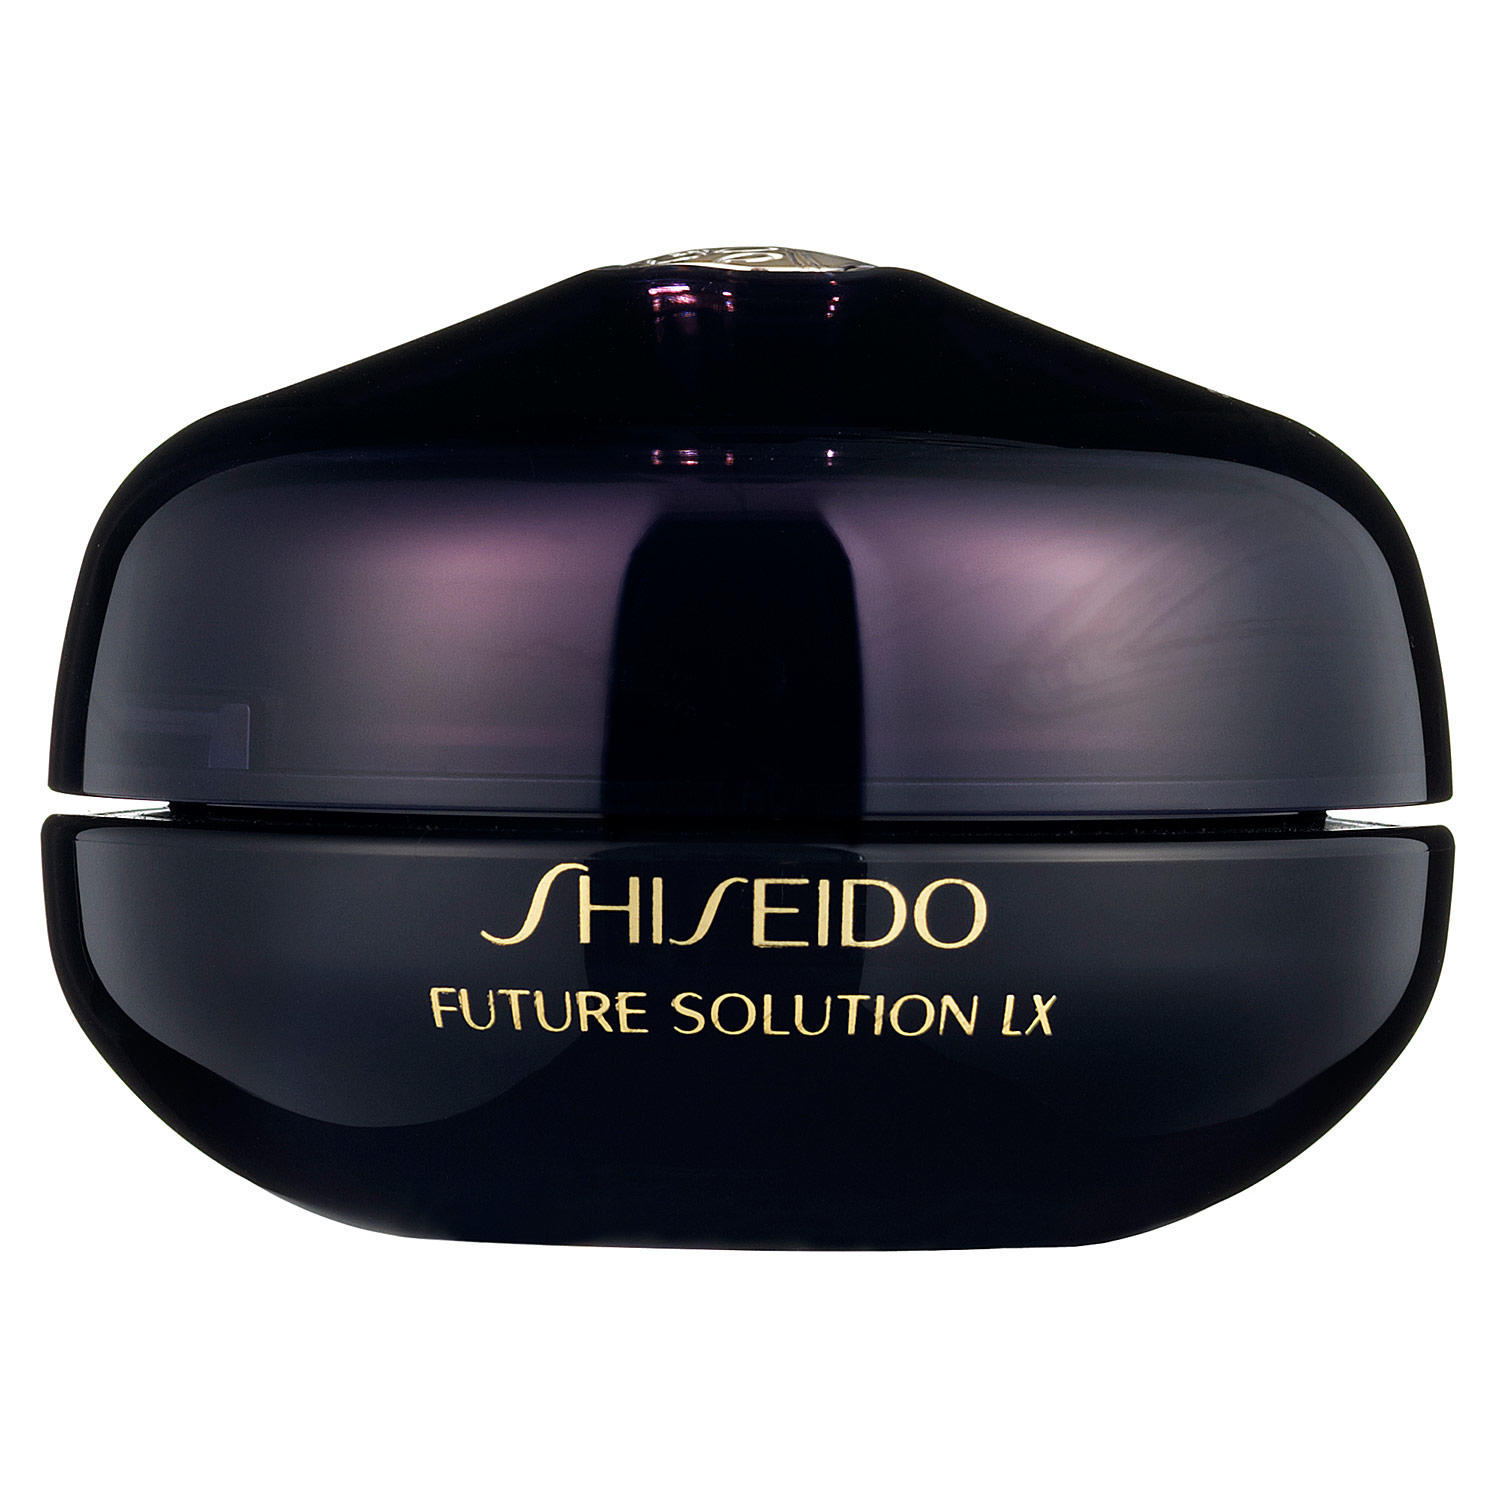 Shiseido solution lx. Крем Shiseido Future solution. Шисейдо крем Future solution LX. Shiseido Future solution LX Eye and Lip Contour Regenerating Cream e. Тональный крем Shiseido Future solution LX тон Neutral.